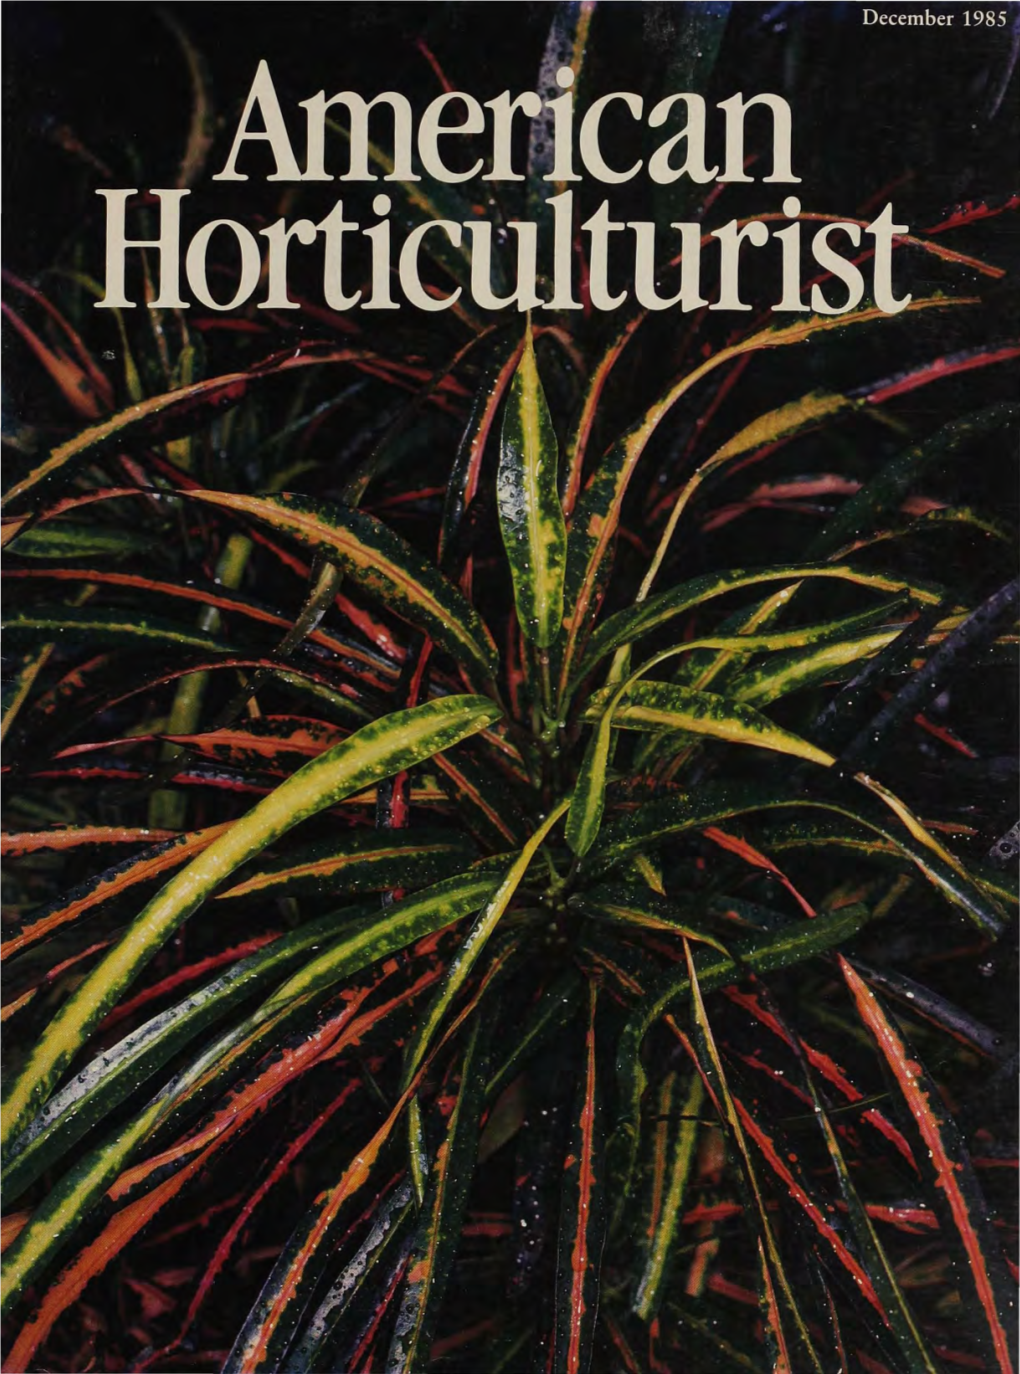 Succulent Geraniums by Helene S